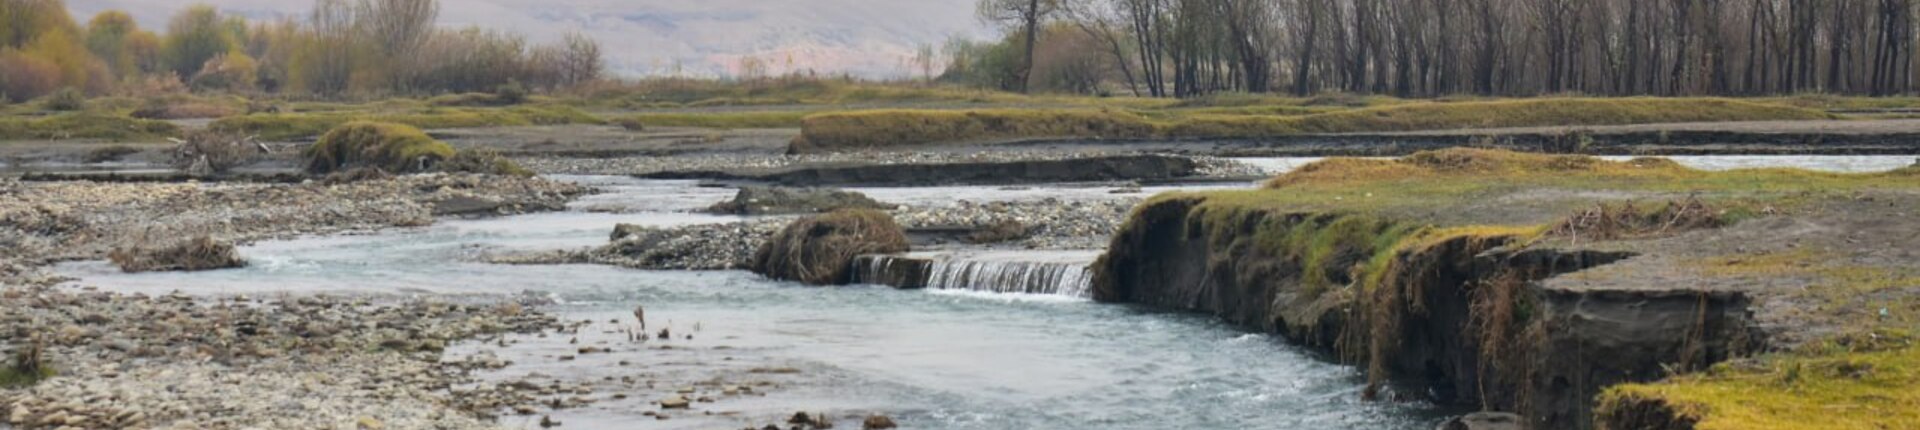 Zarafshan River in Tajikistan. Photo: M. Gritsina